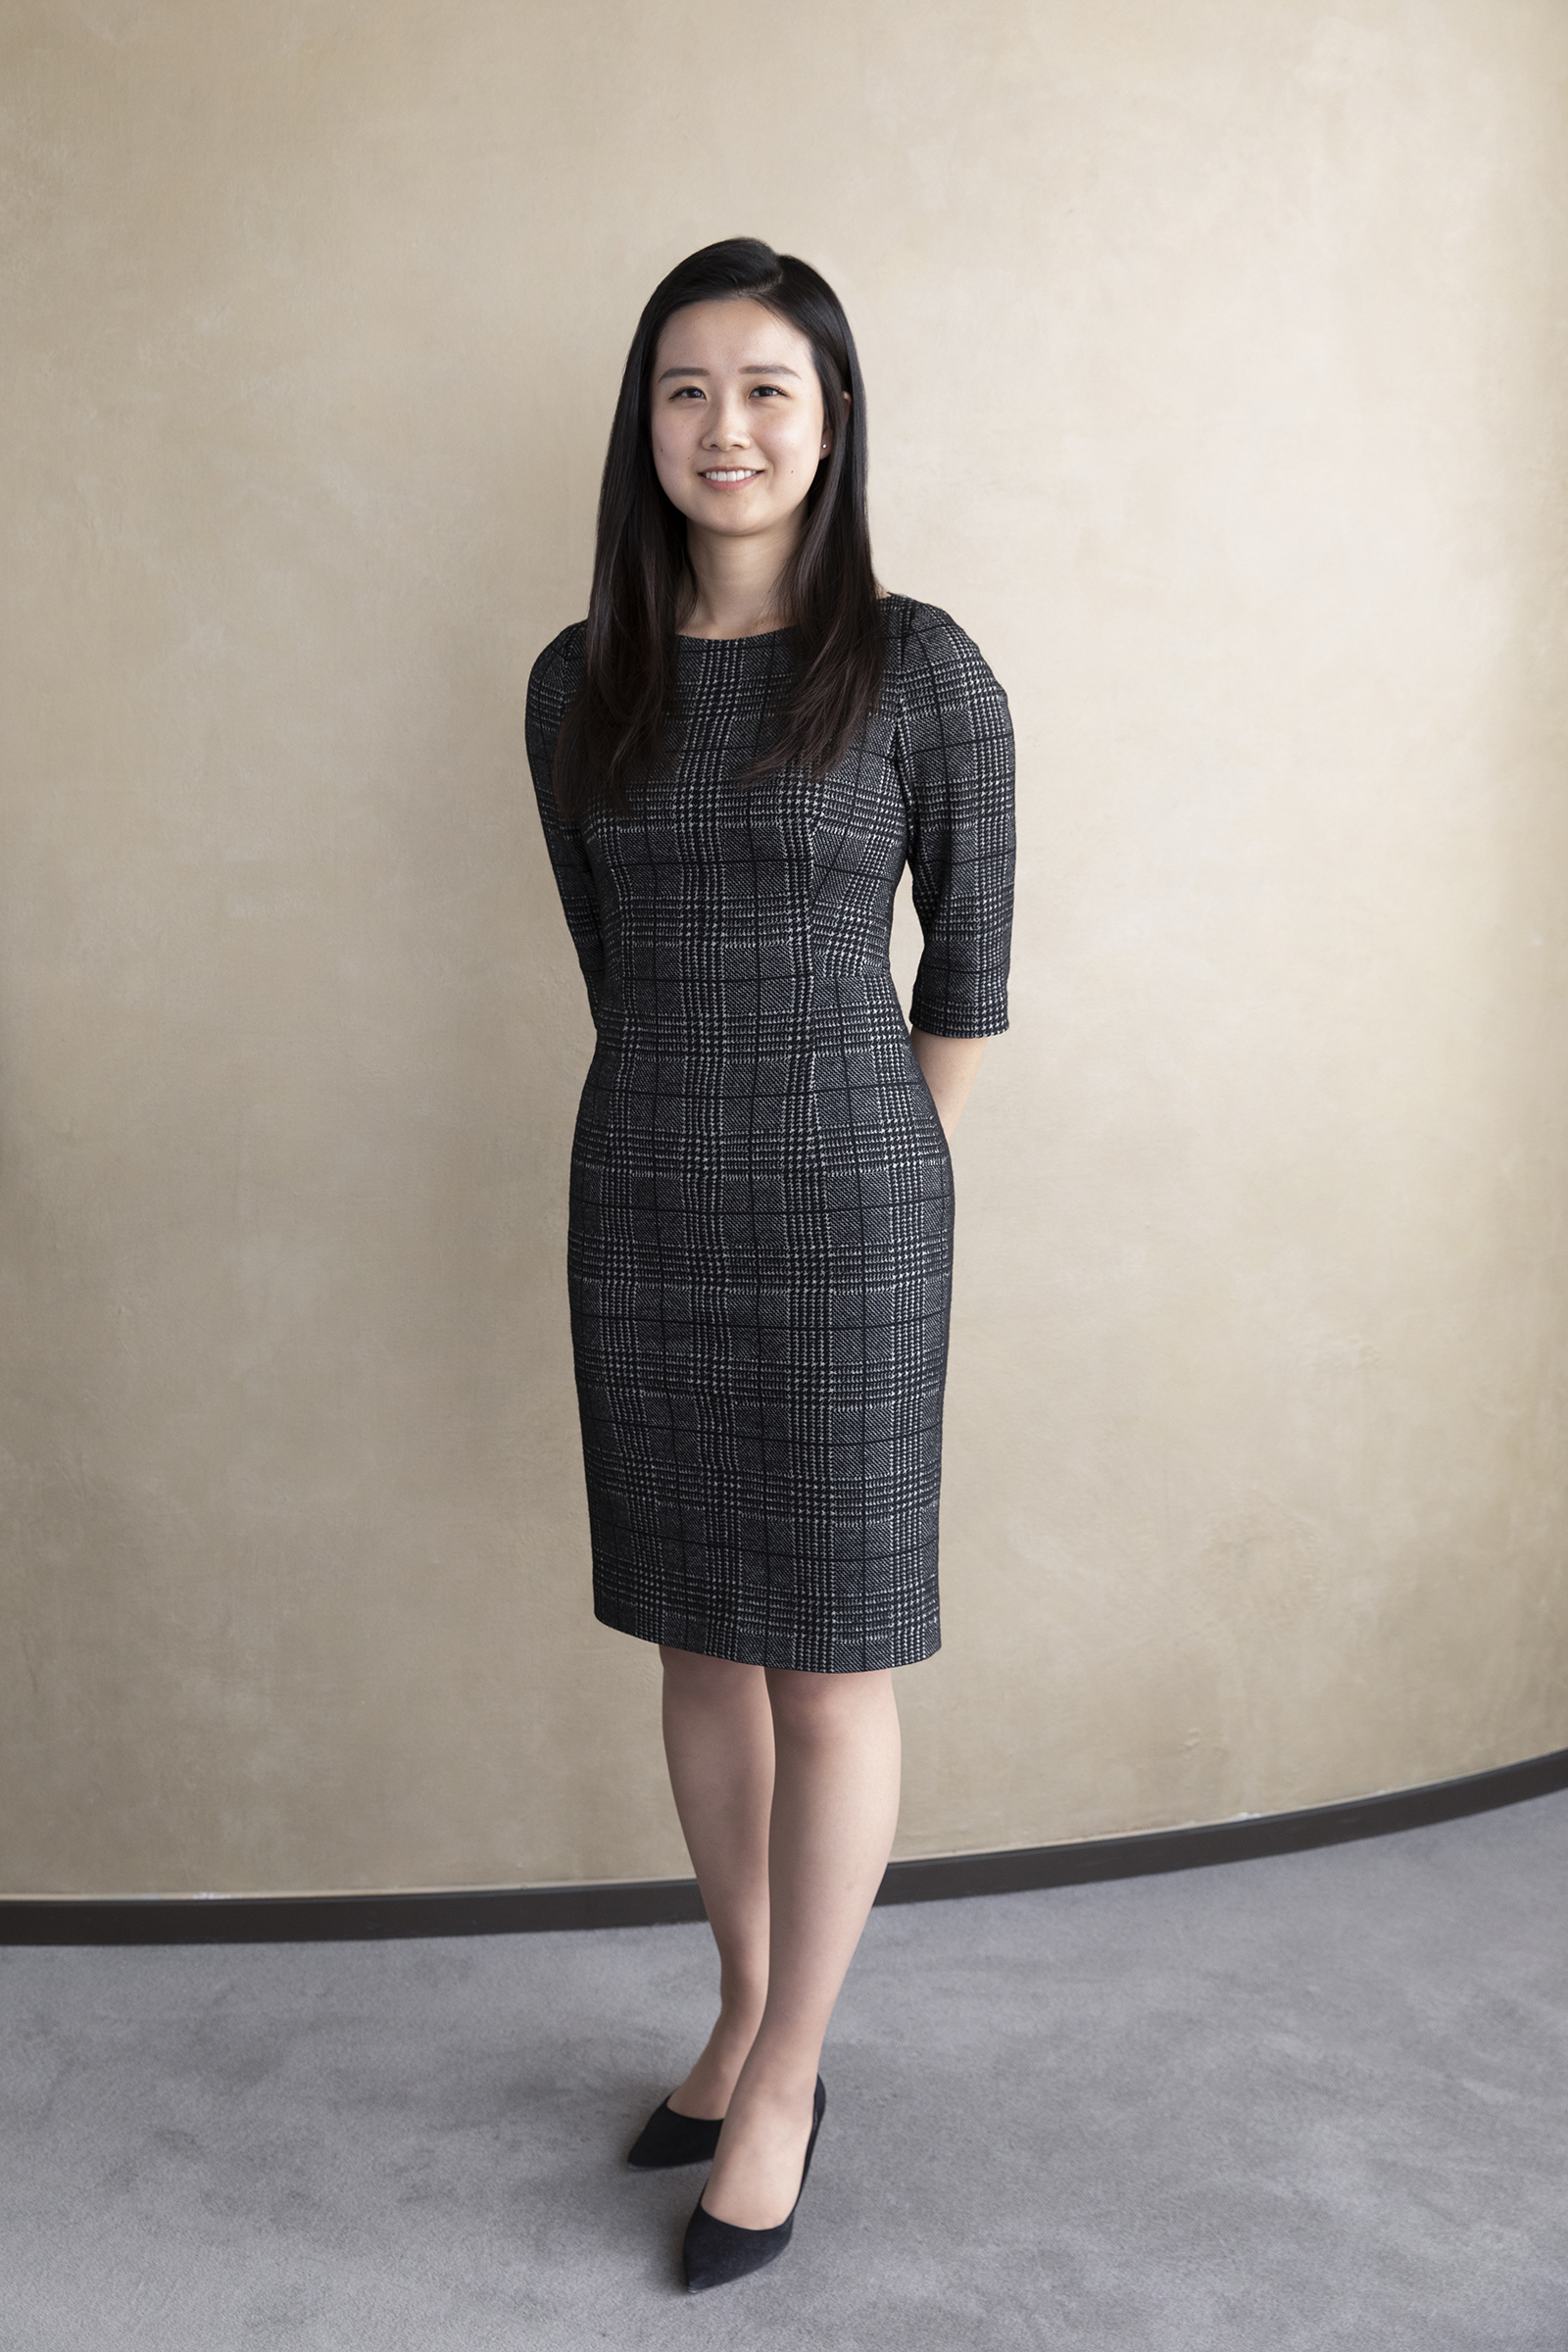 Angela Jiang -  Analyst,
Fixed Income